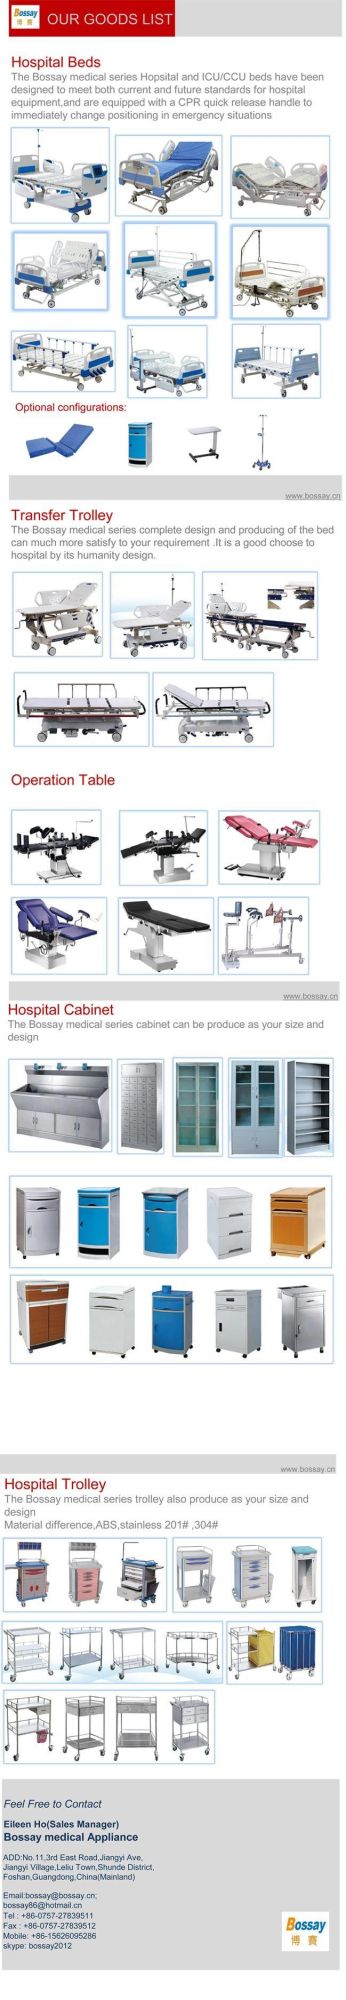 Medical Bed Manufacturer Two Crank Manual Hospital Bed (BS-828A)